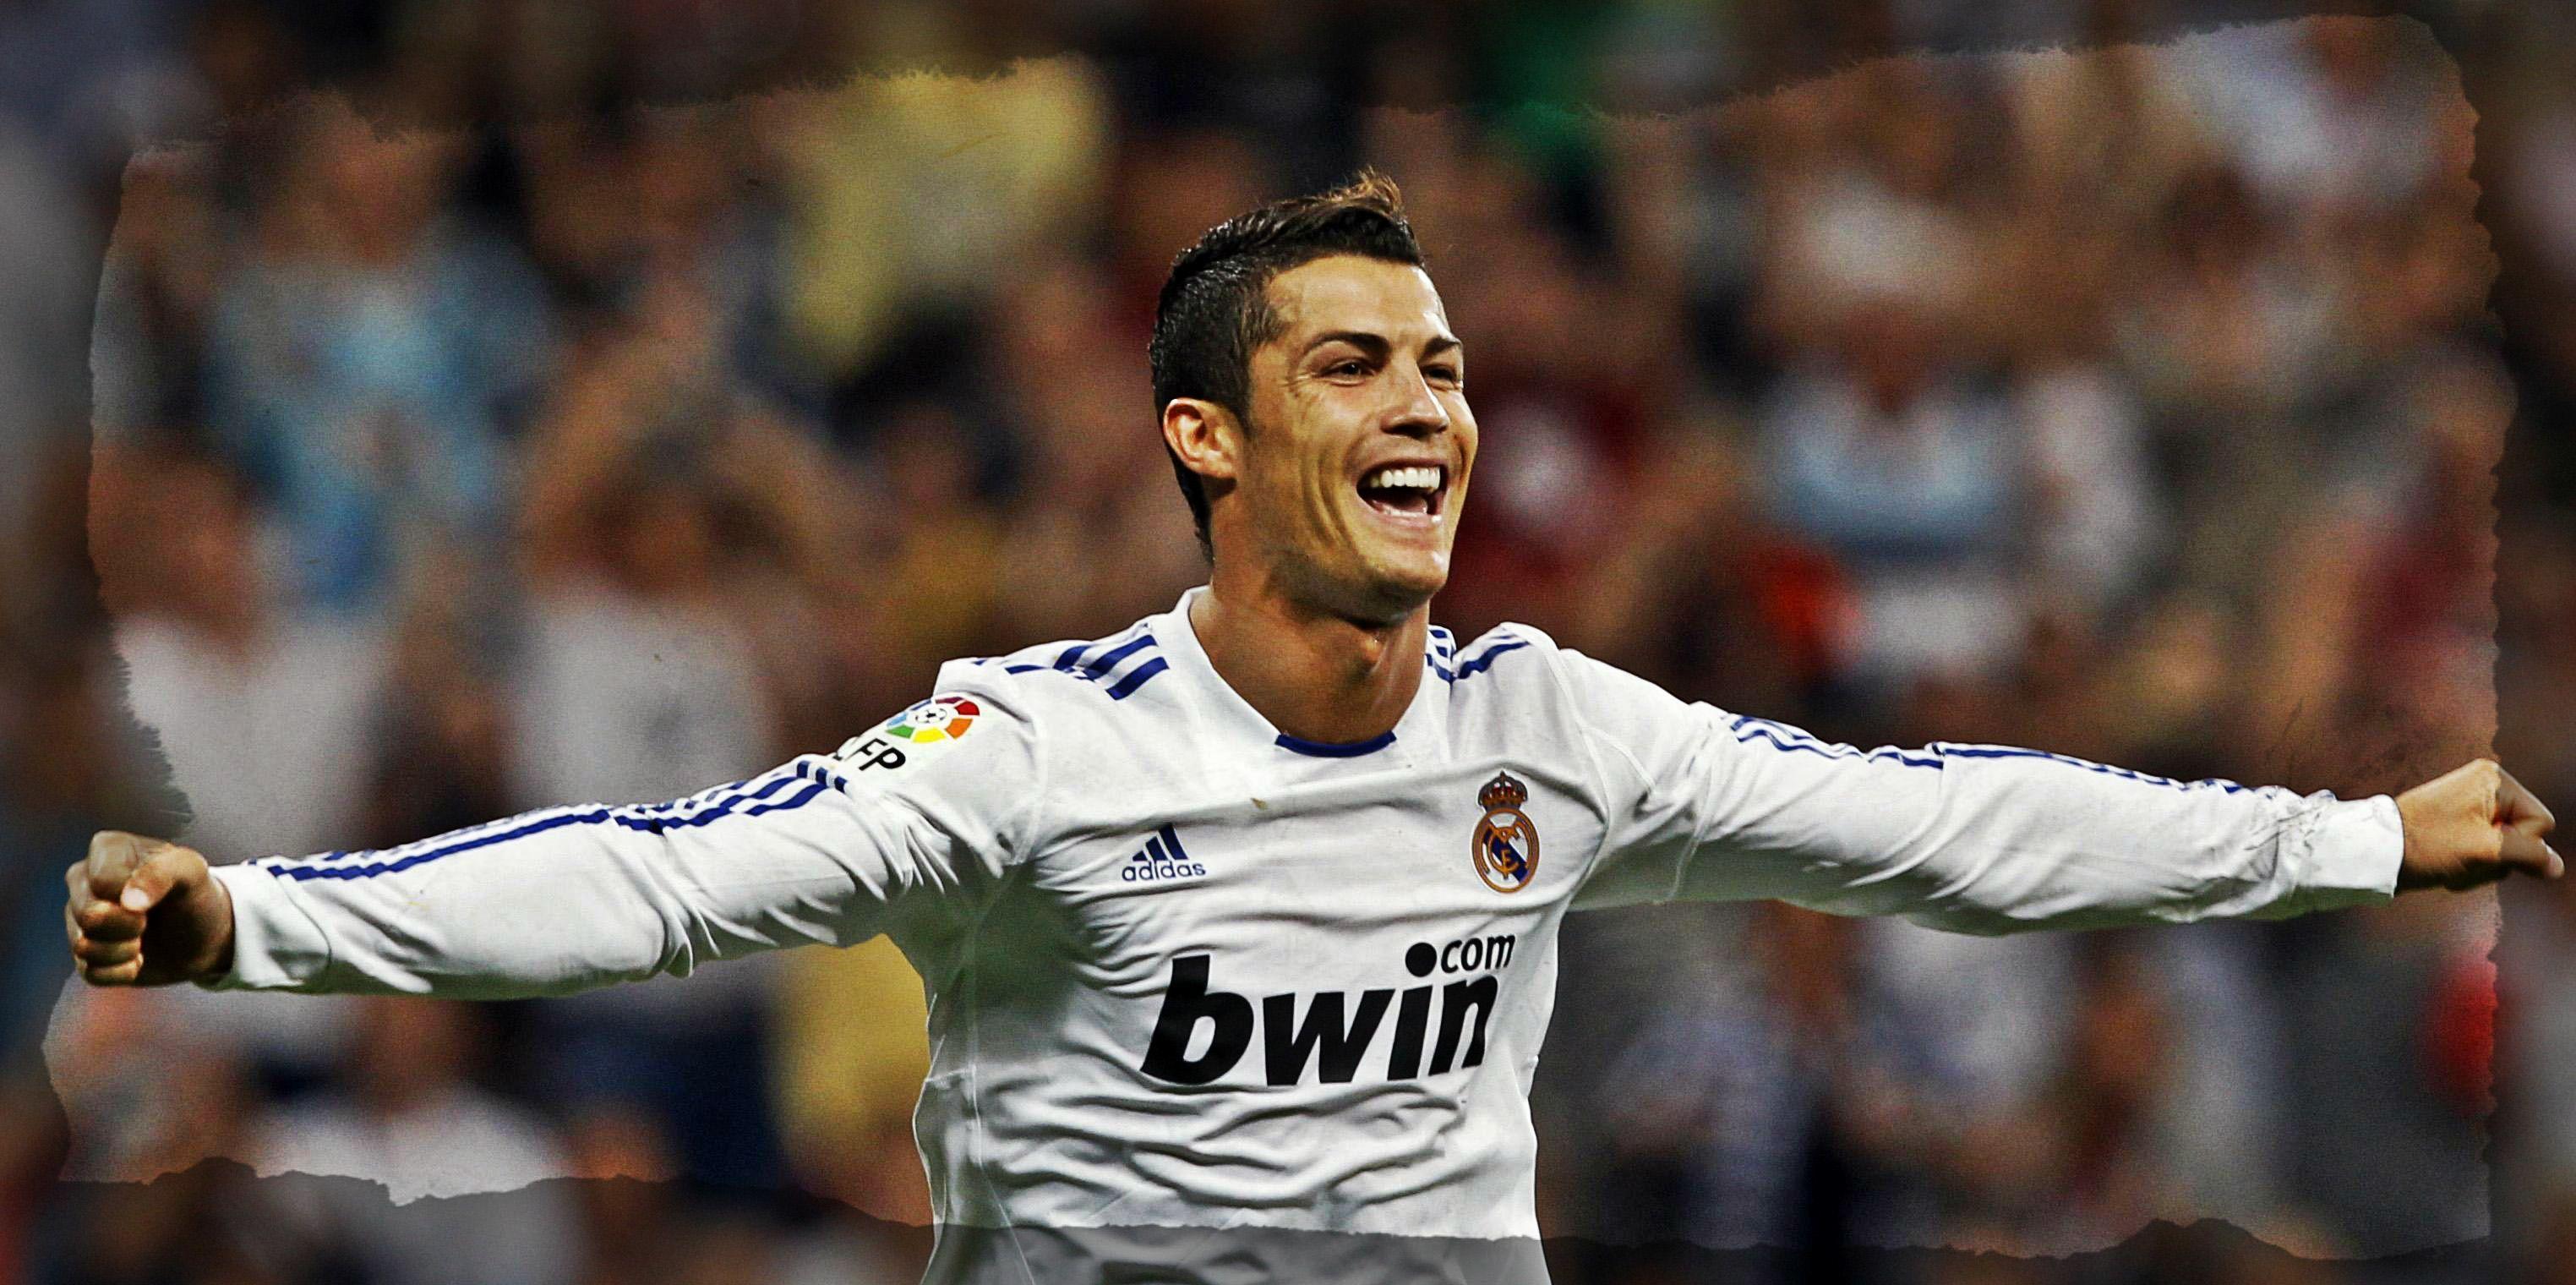 Image Gallery of Cristiano Ronaldo Celebrating A Goal Wallpaper